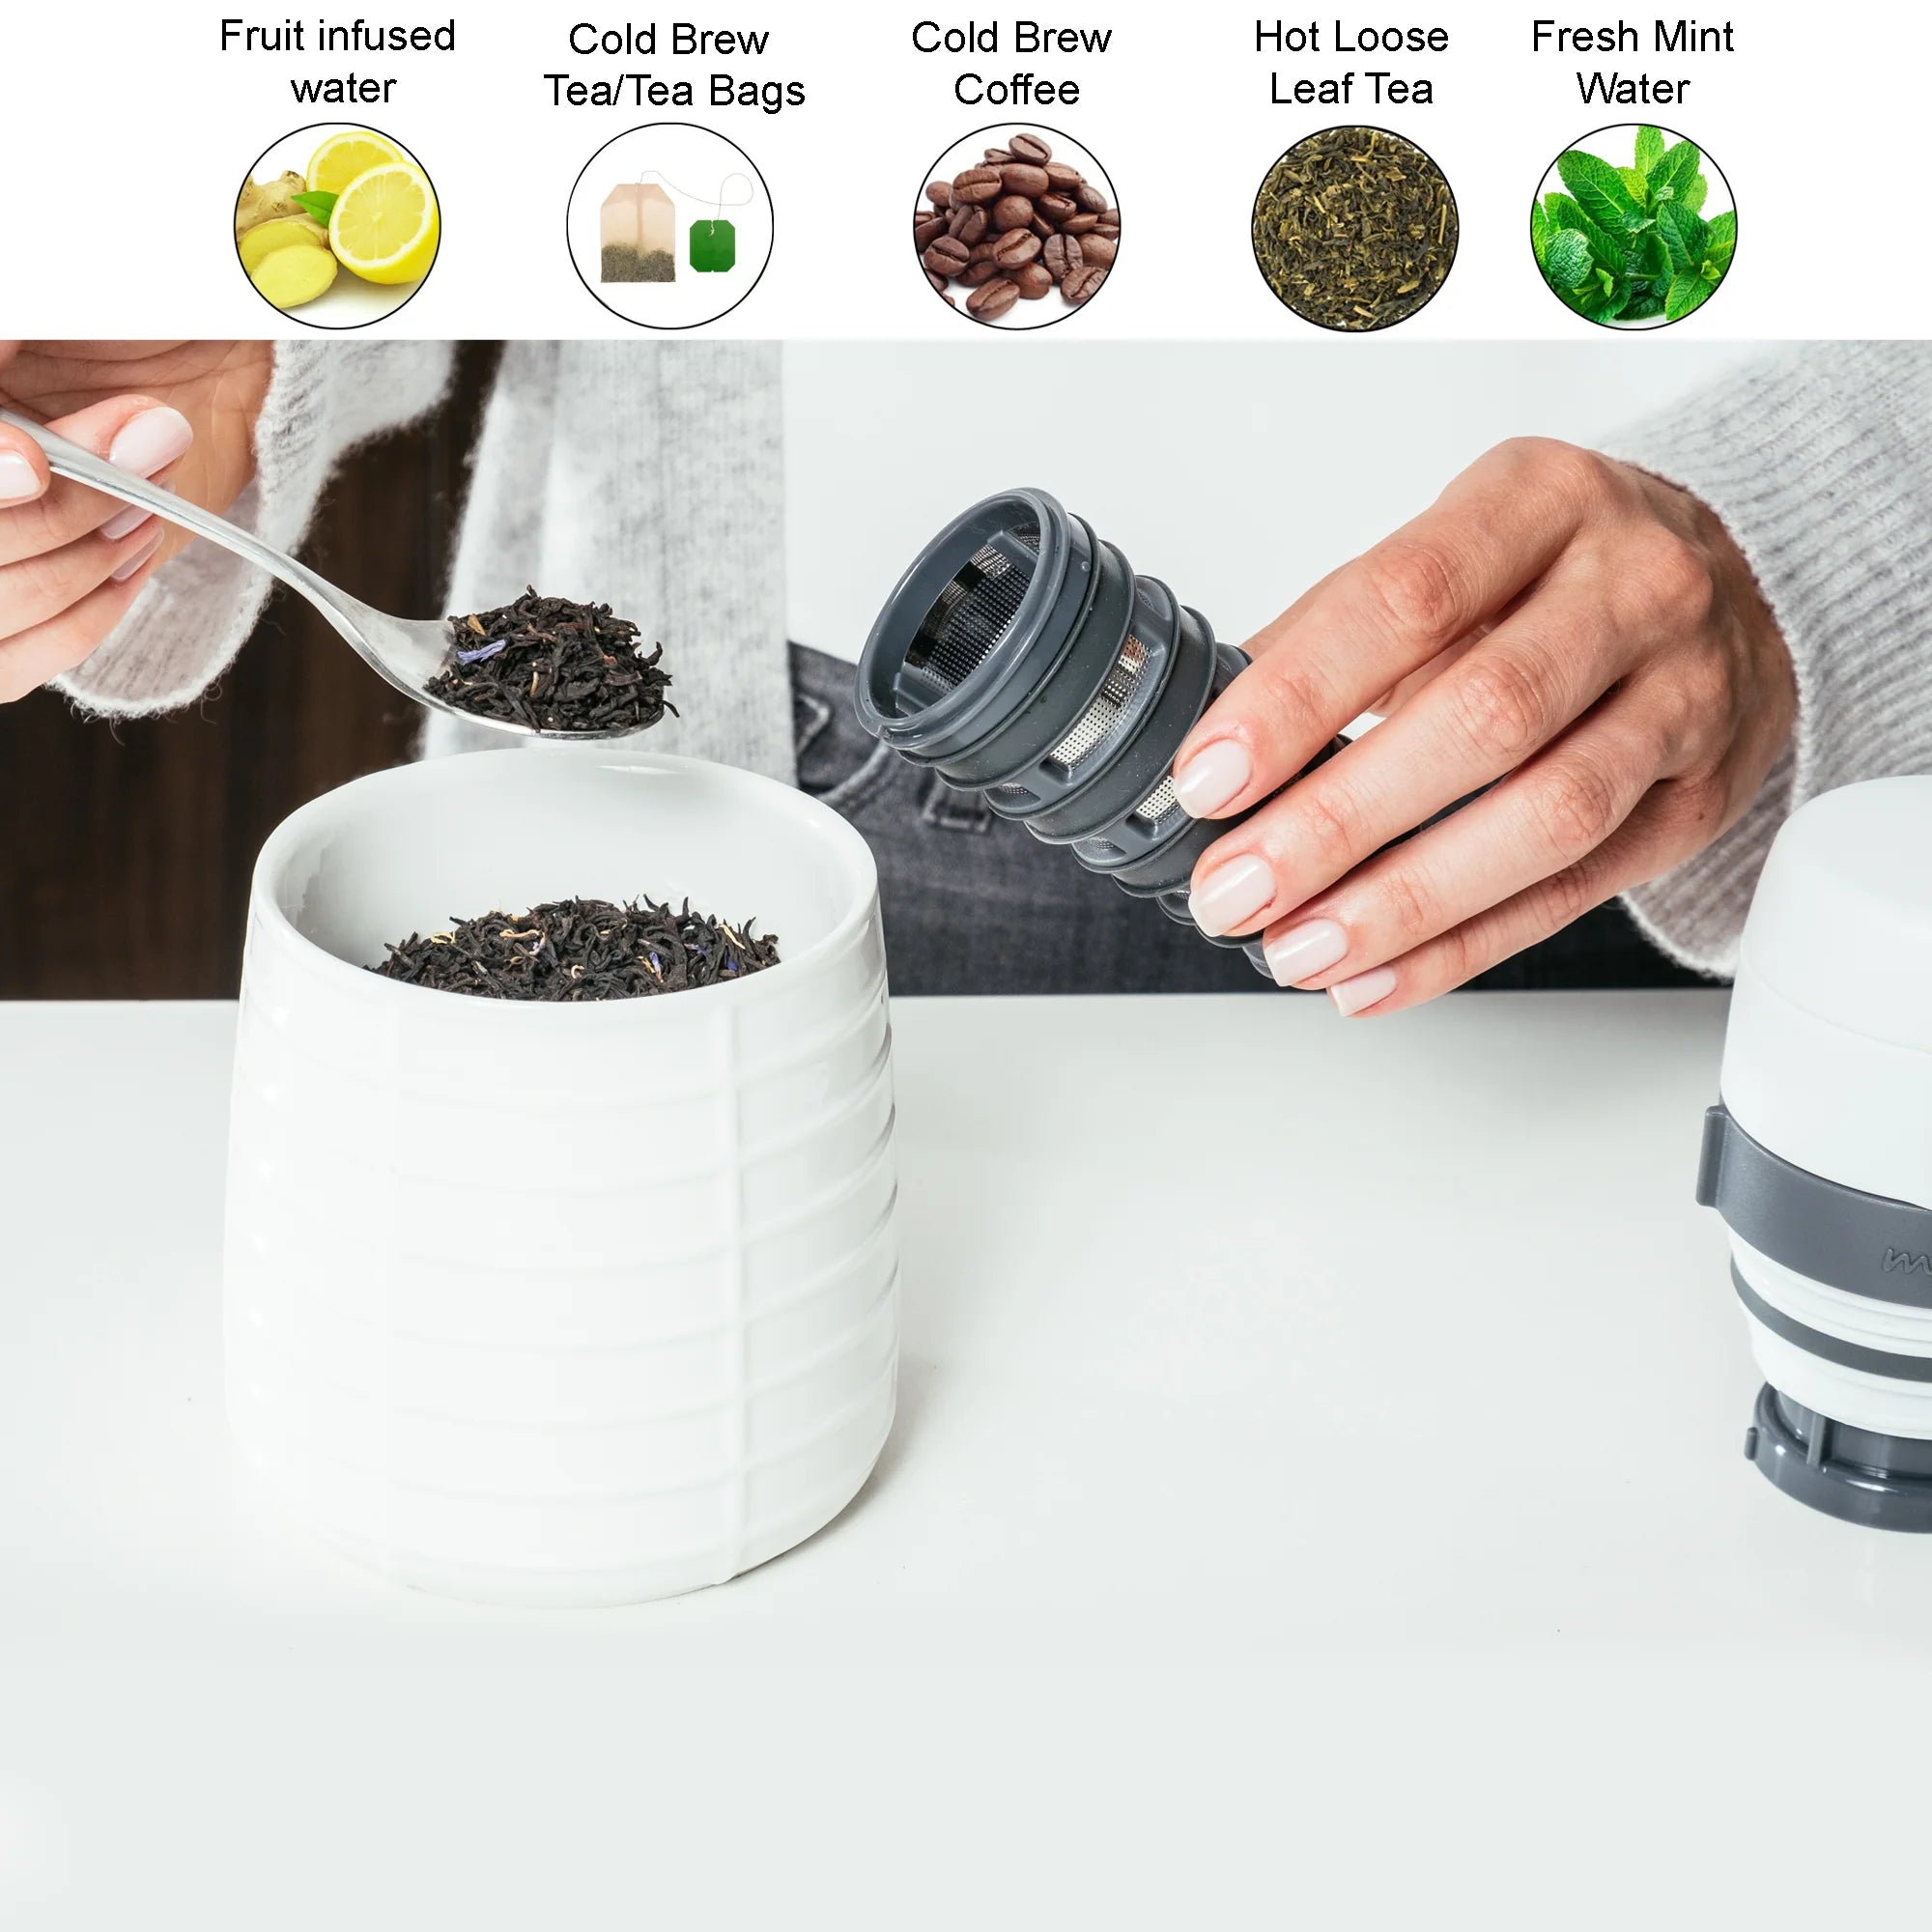 Menna 16 oz portable tea and beverage infuser